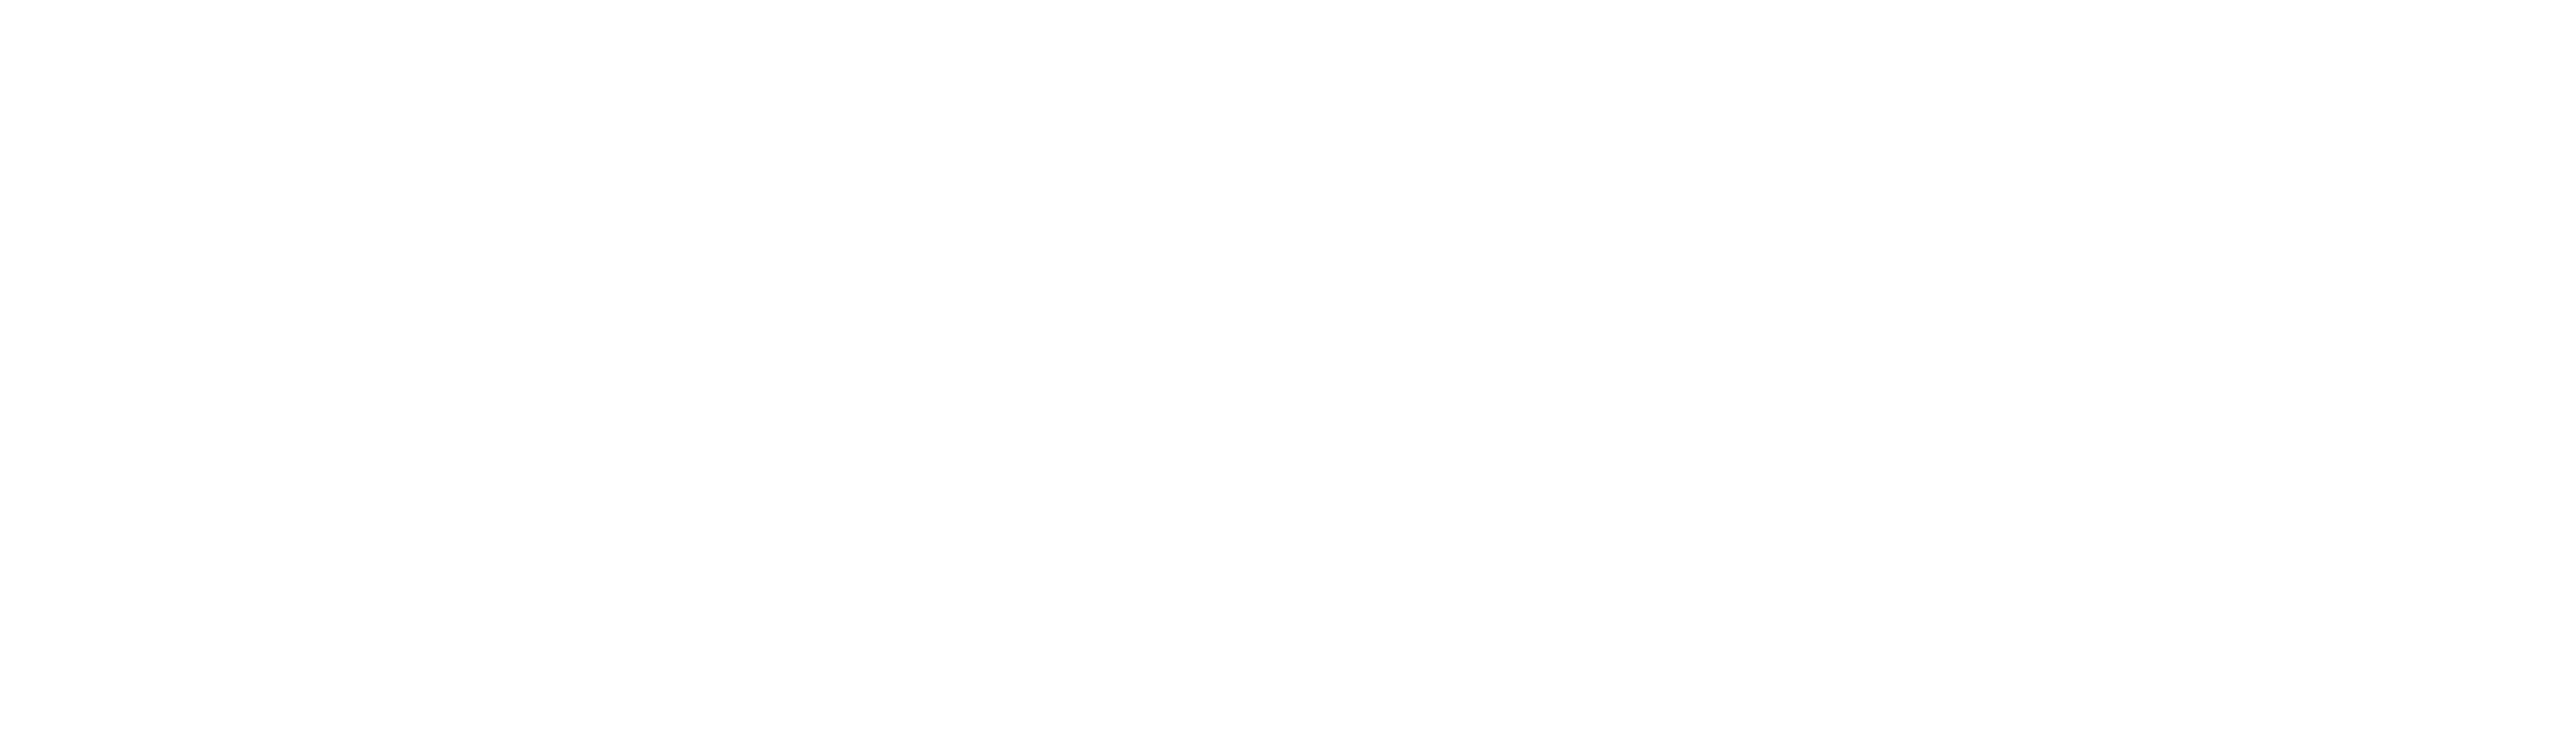 AMD Together we advance